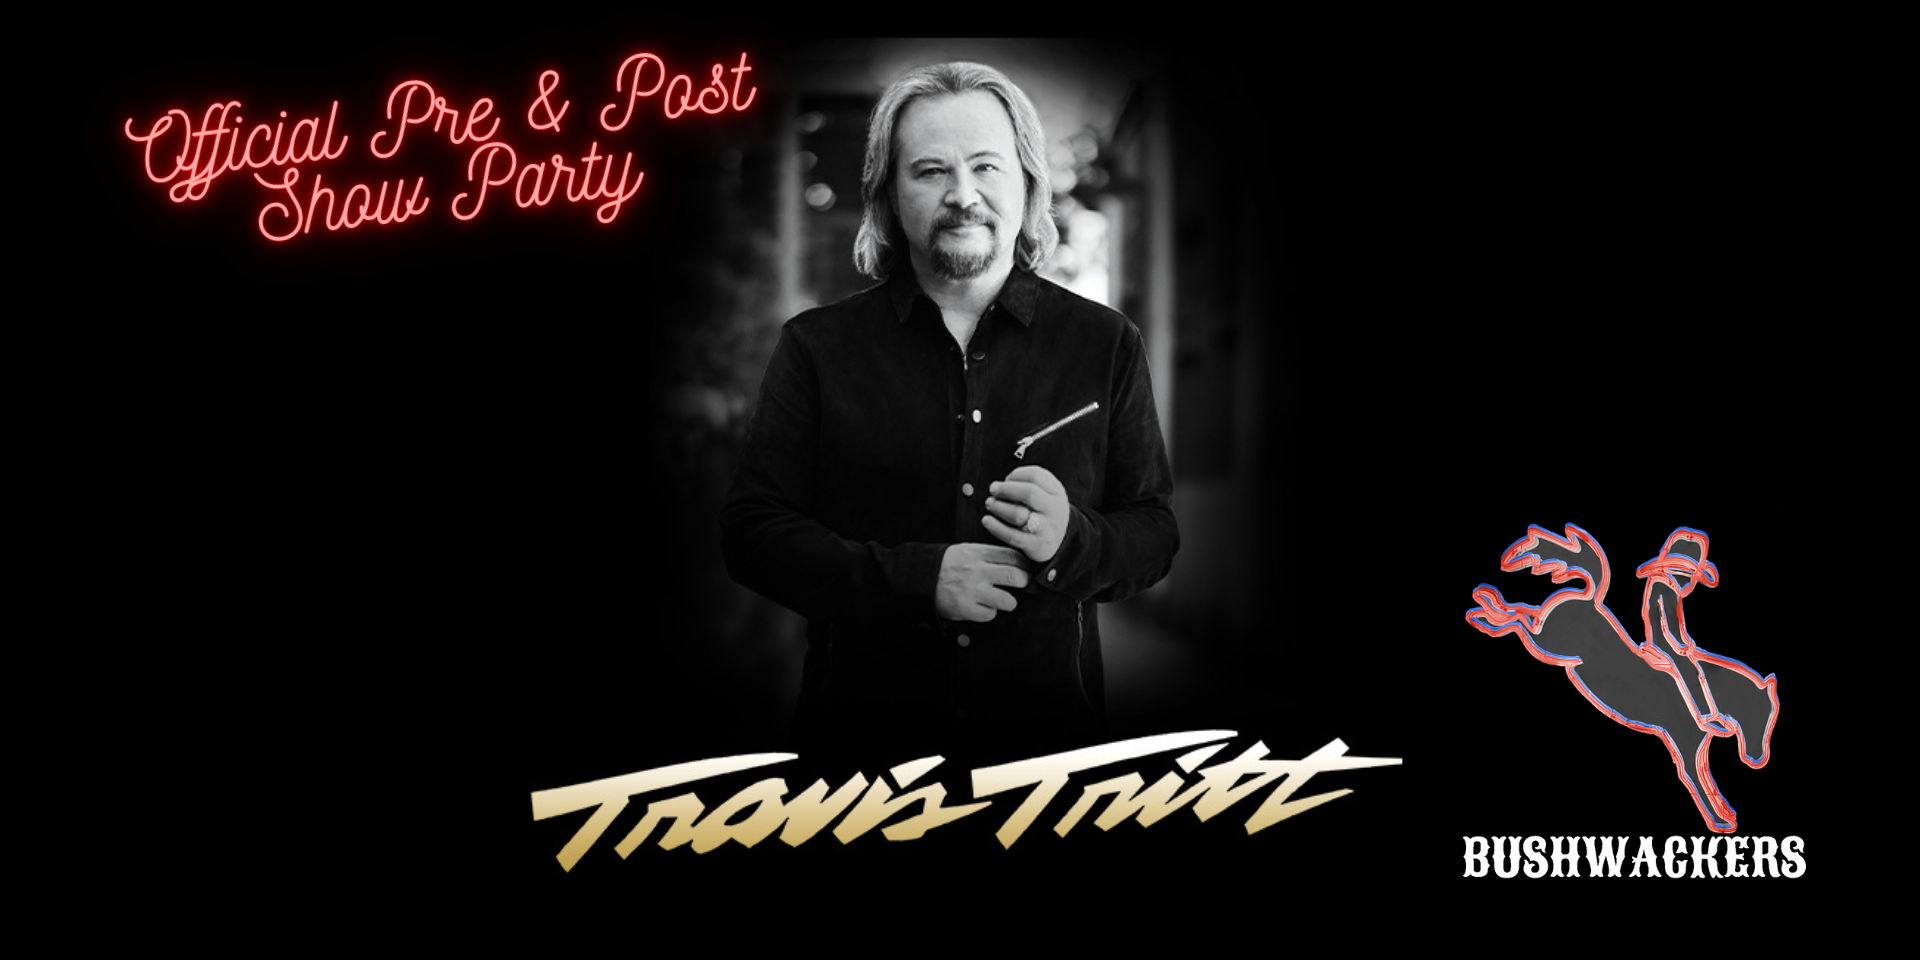 Bushwackers Presents Pre & Post Travis Tritt Party! promotional image